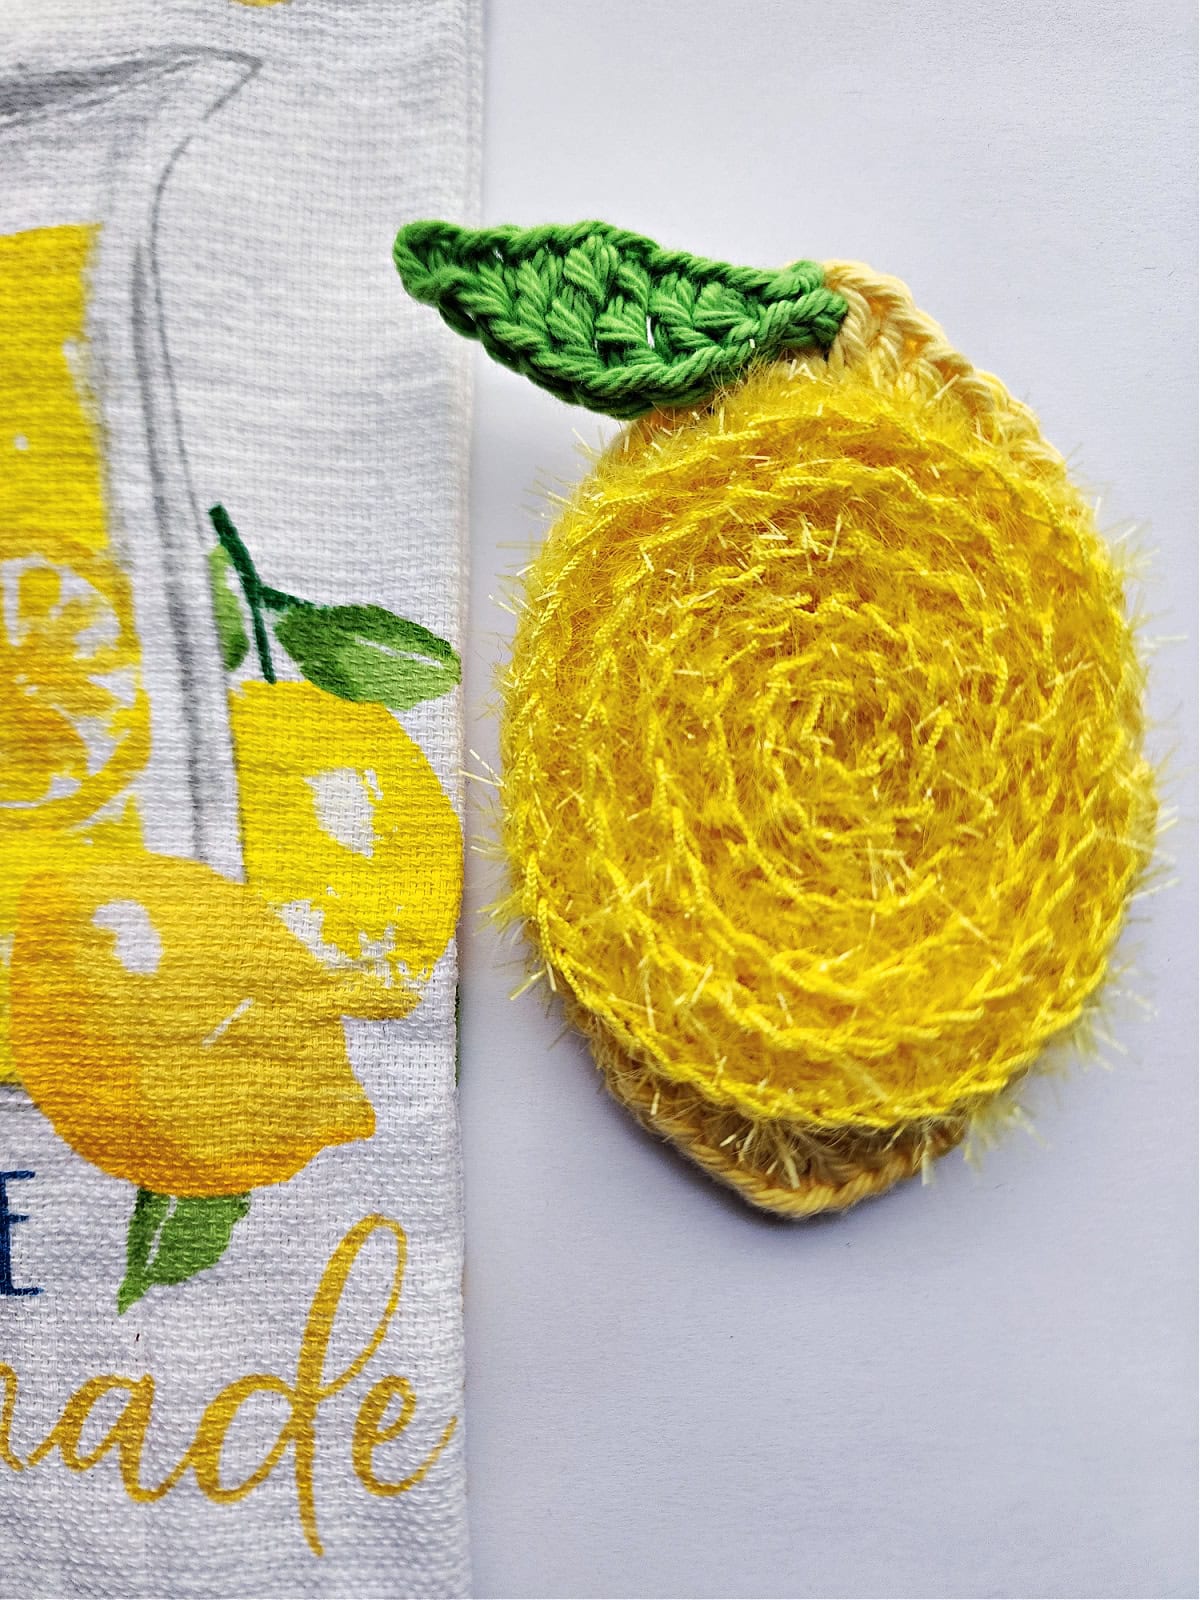 Lemon crochet dish scrubby laying next to a kitchen hand towel.